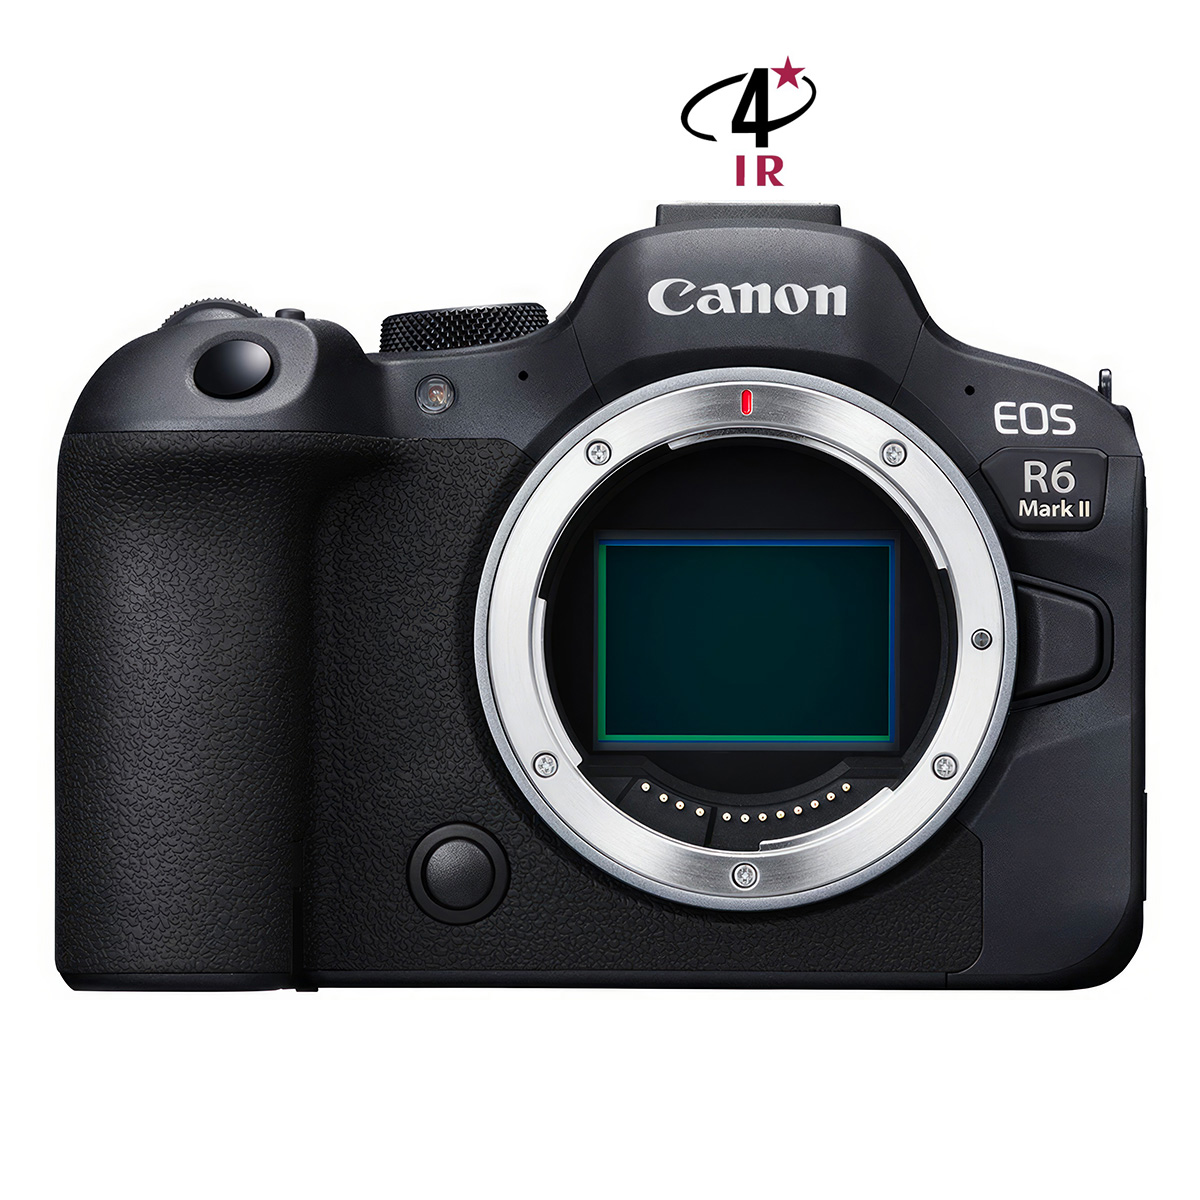 Hybride Canon EOS R6 Mark II neuf défiltré + refiltré 4'IR New 4'IR Cameras